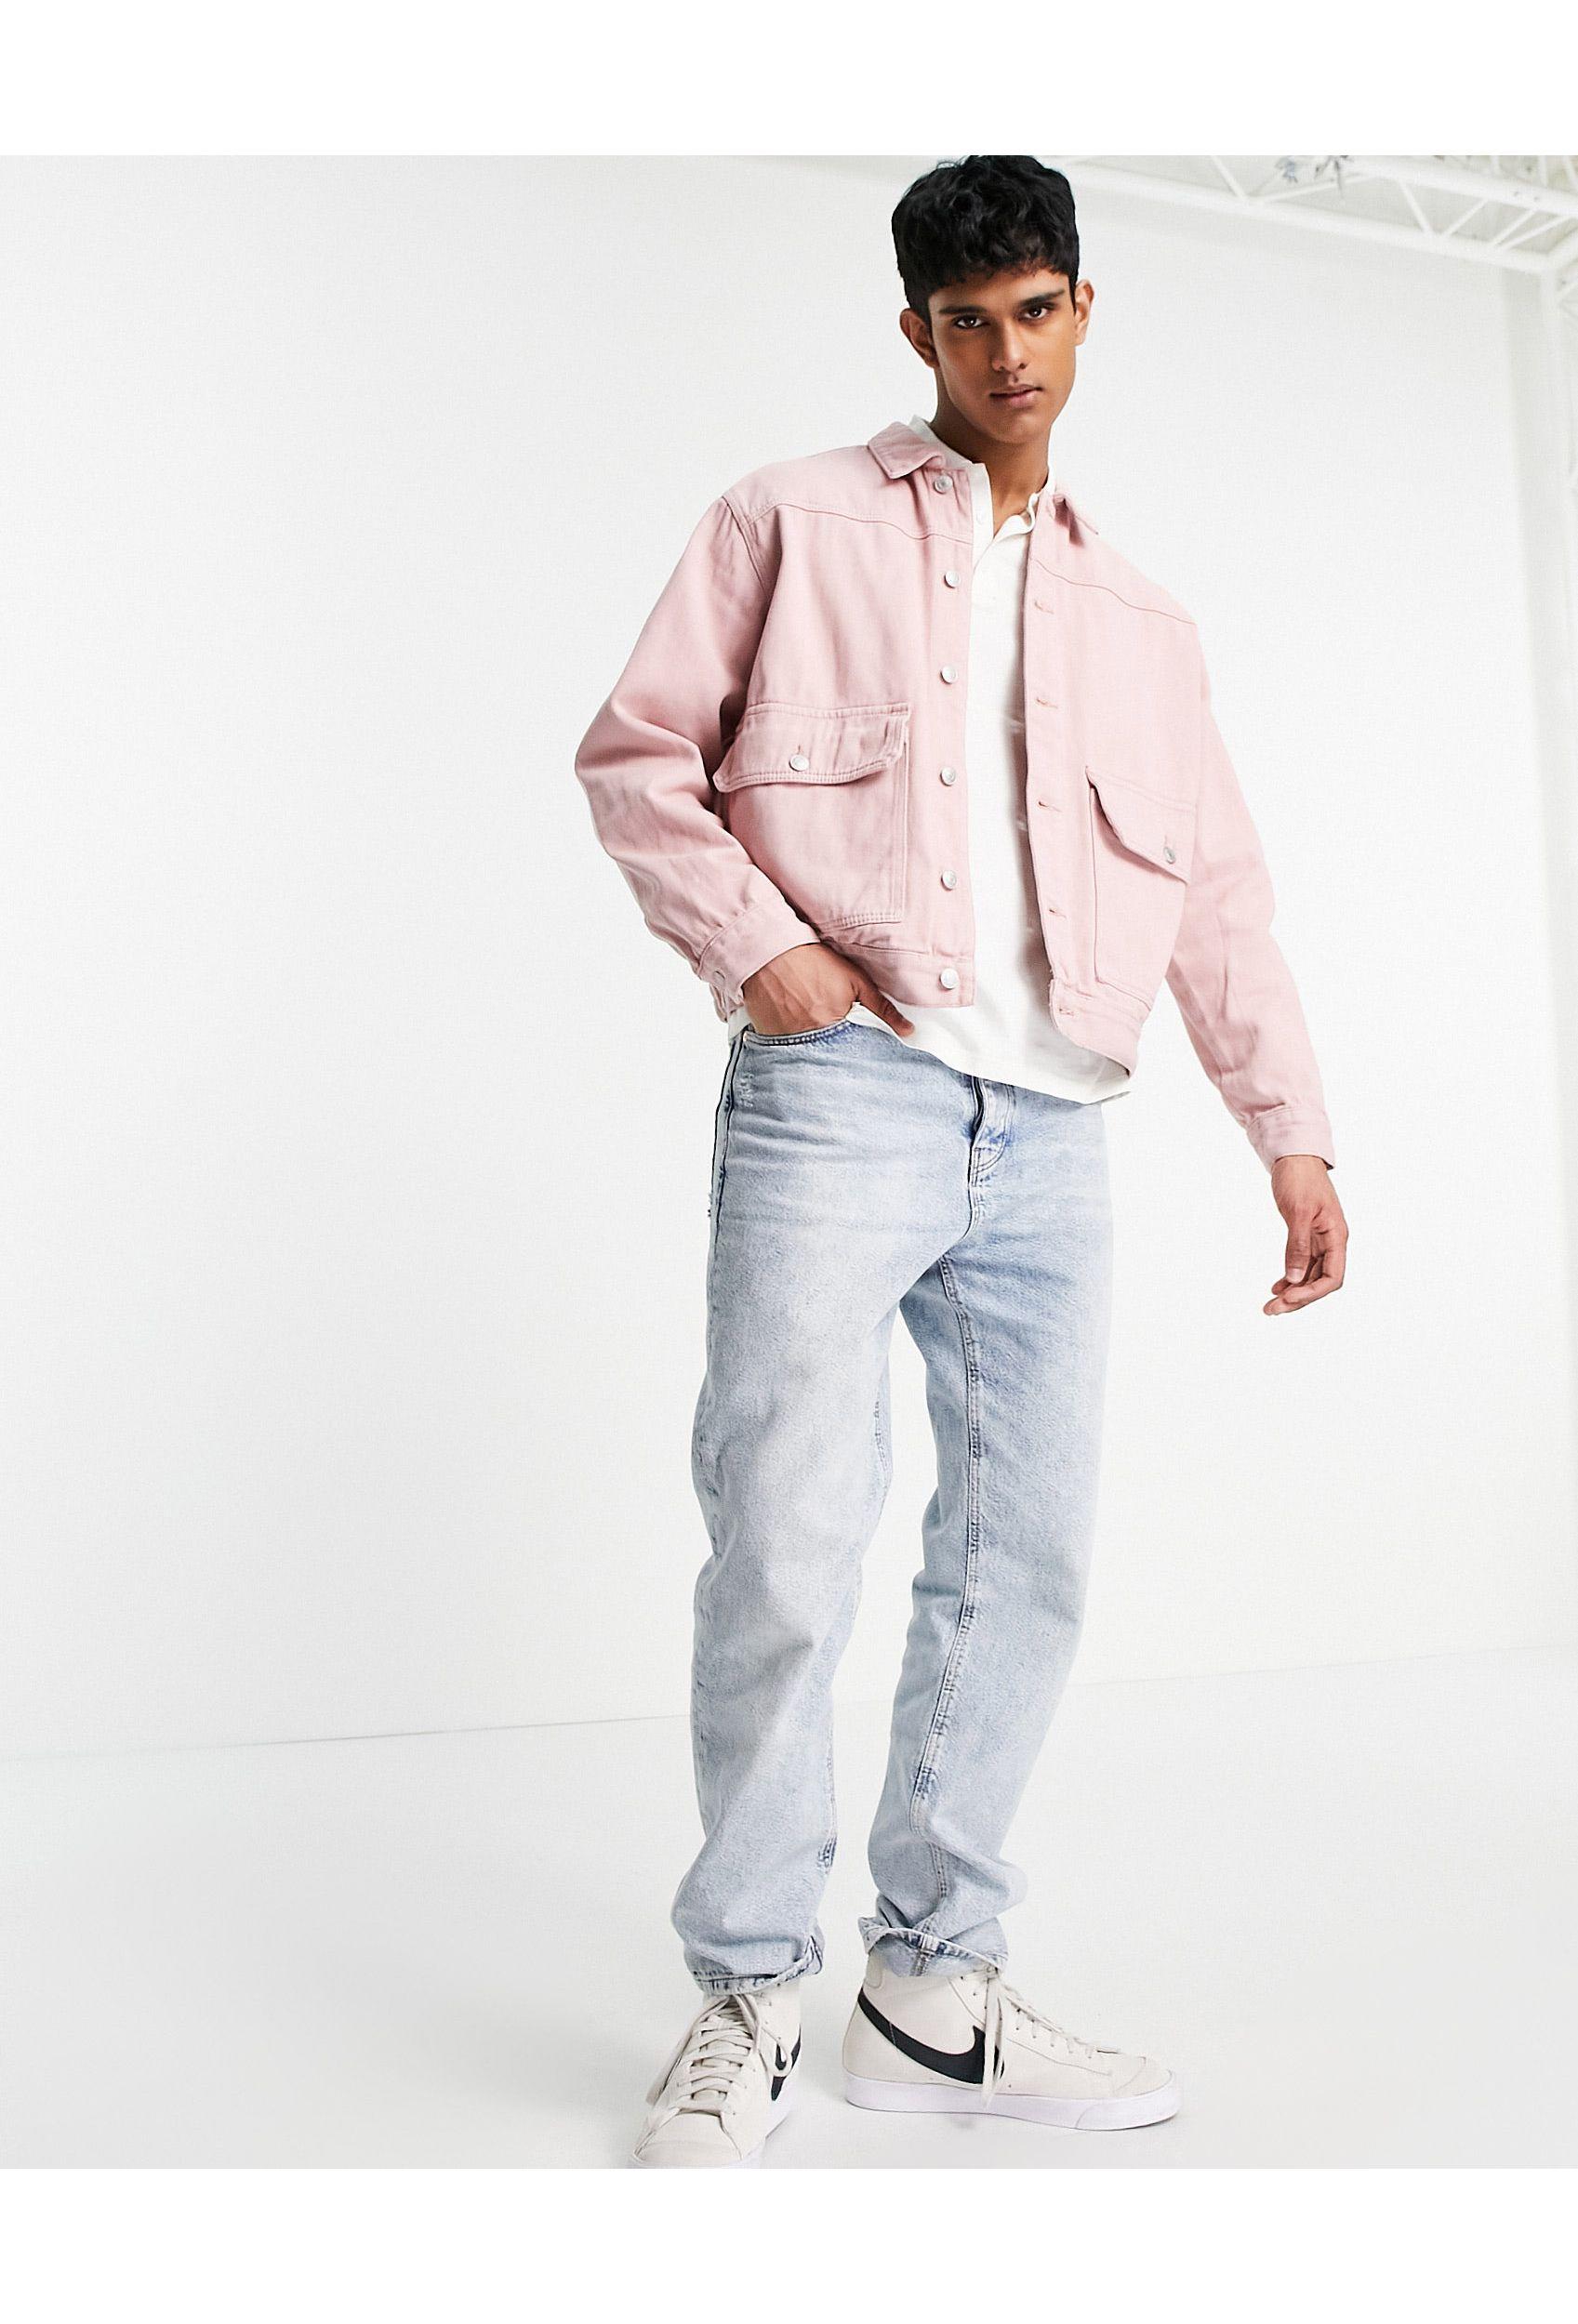 TOPMAN Denim Jacket With Pockets in Pink for Men | Lyst